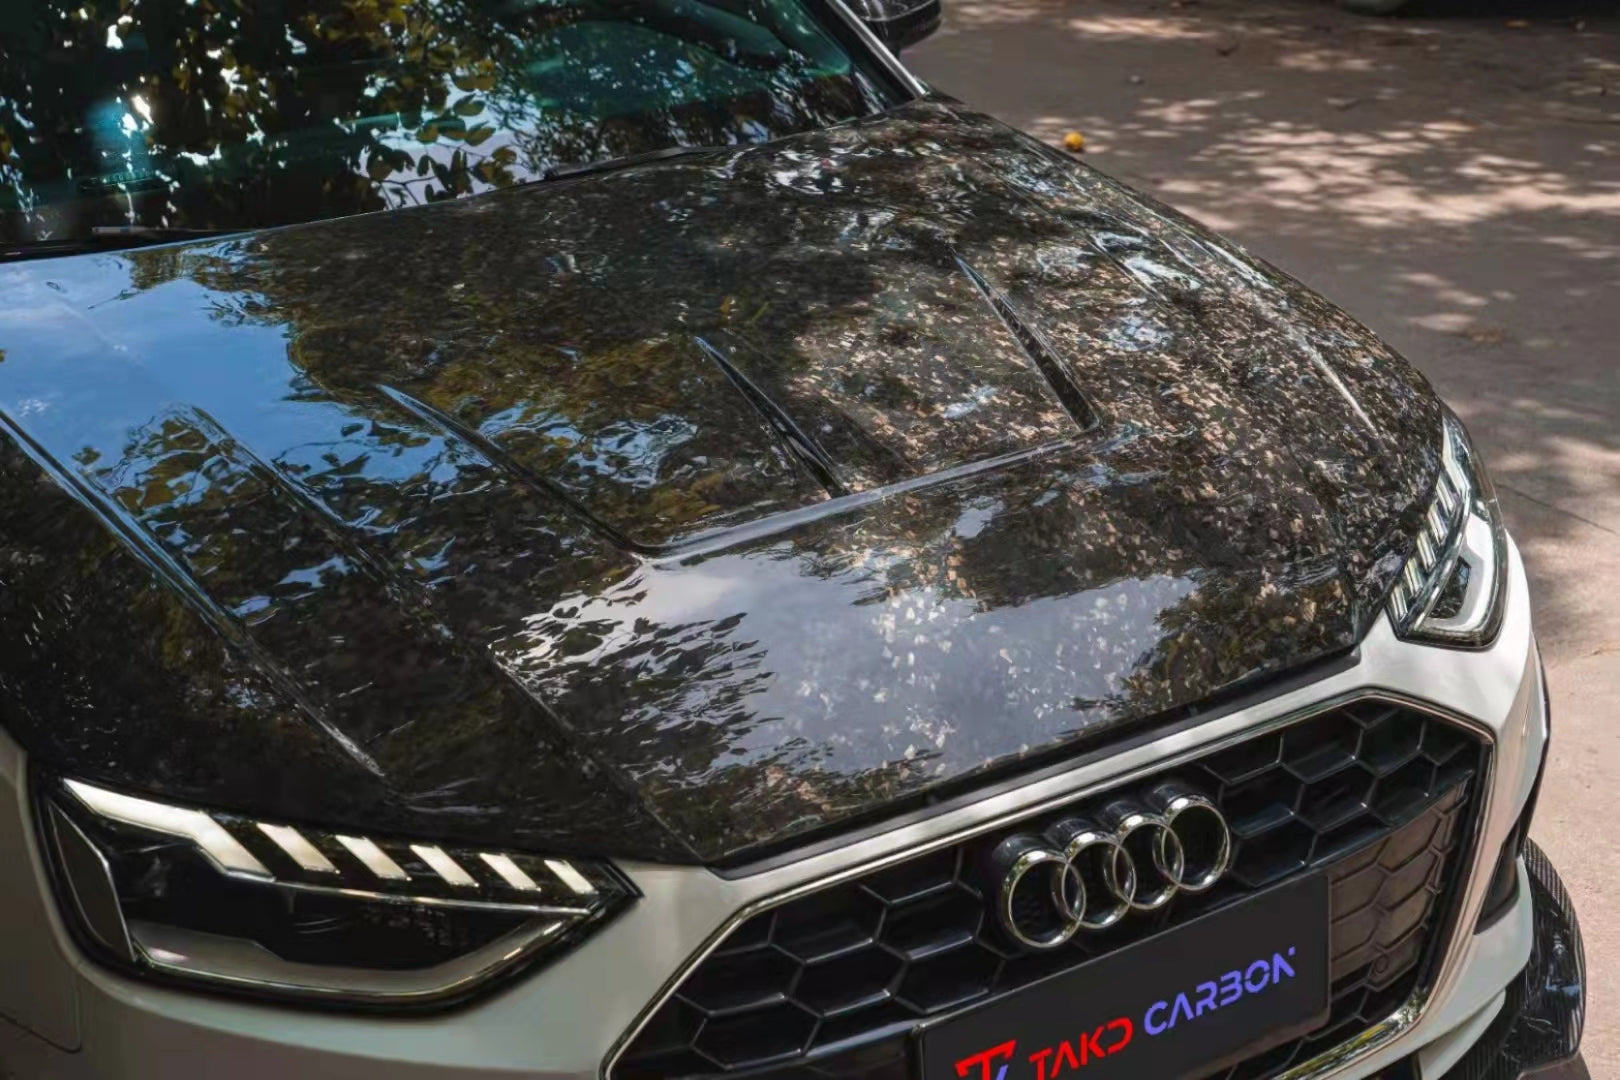 TAKD Carbon Carbon Fiber Hood Bonnet Ver.1 for Audi A4 & S4 2017-ON B9 B9.5